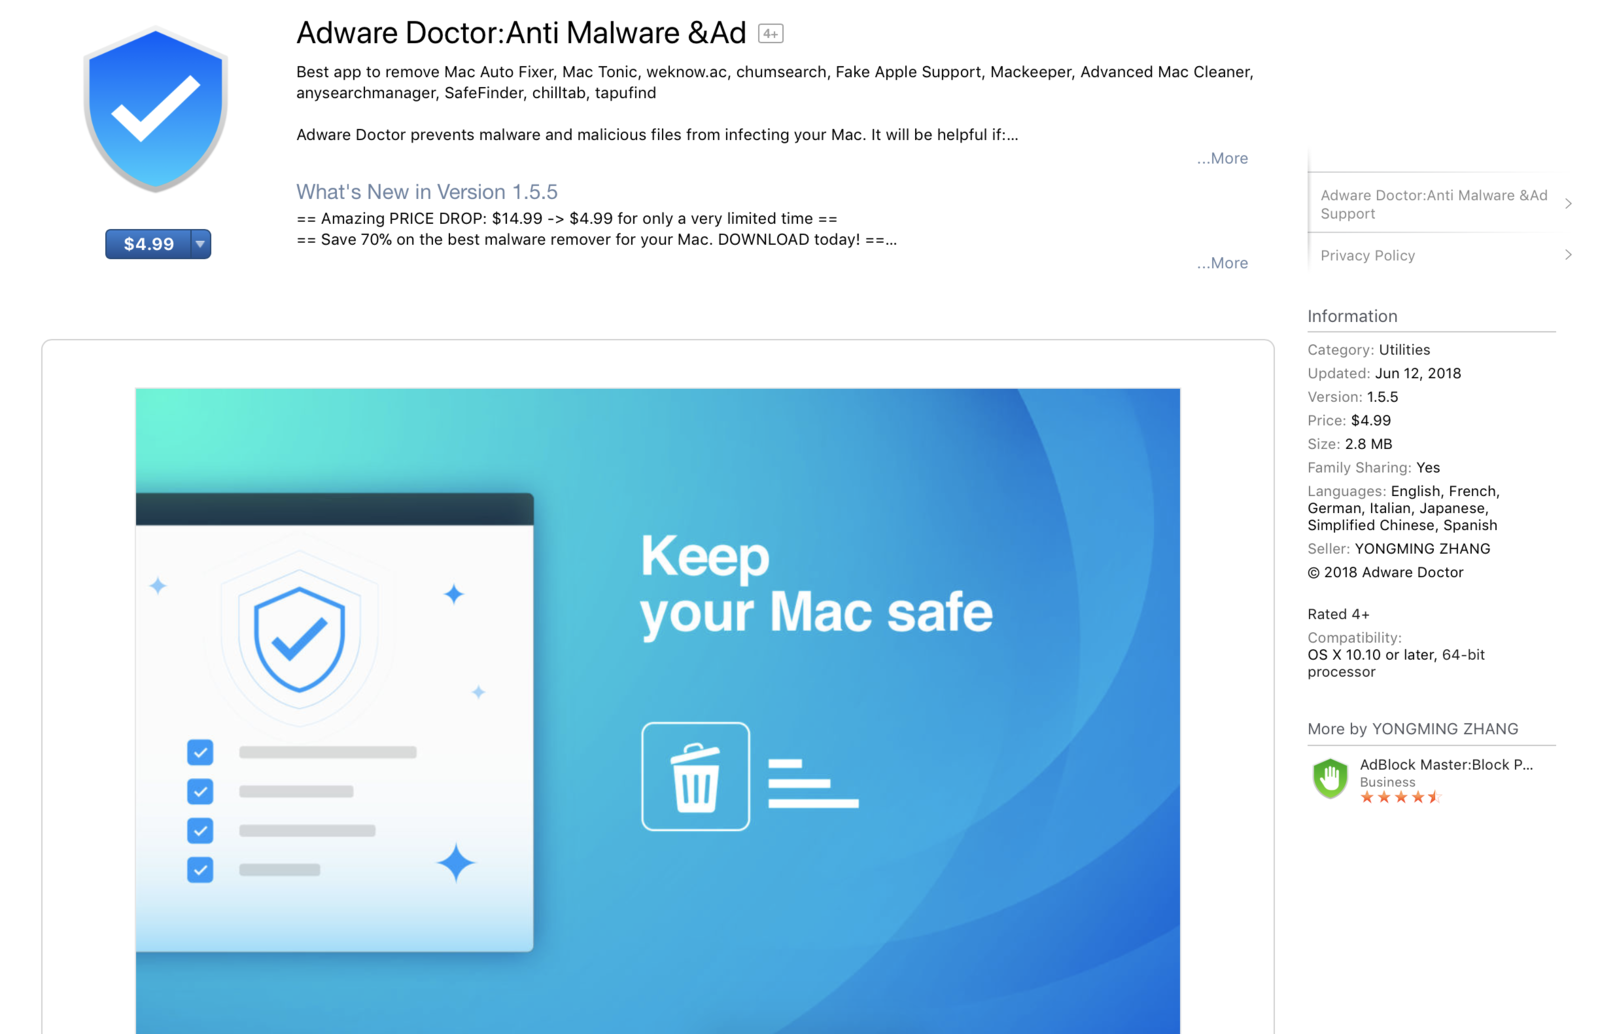 advanced mac cleaner website